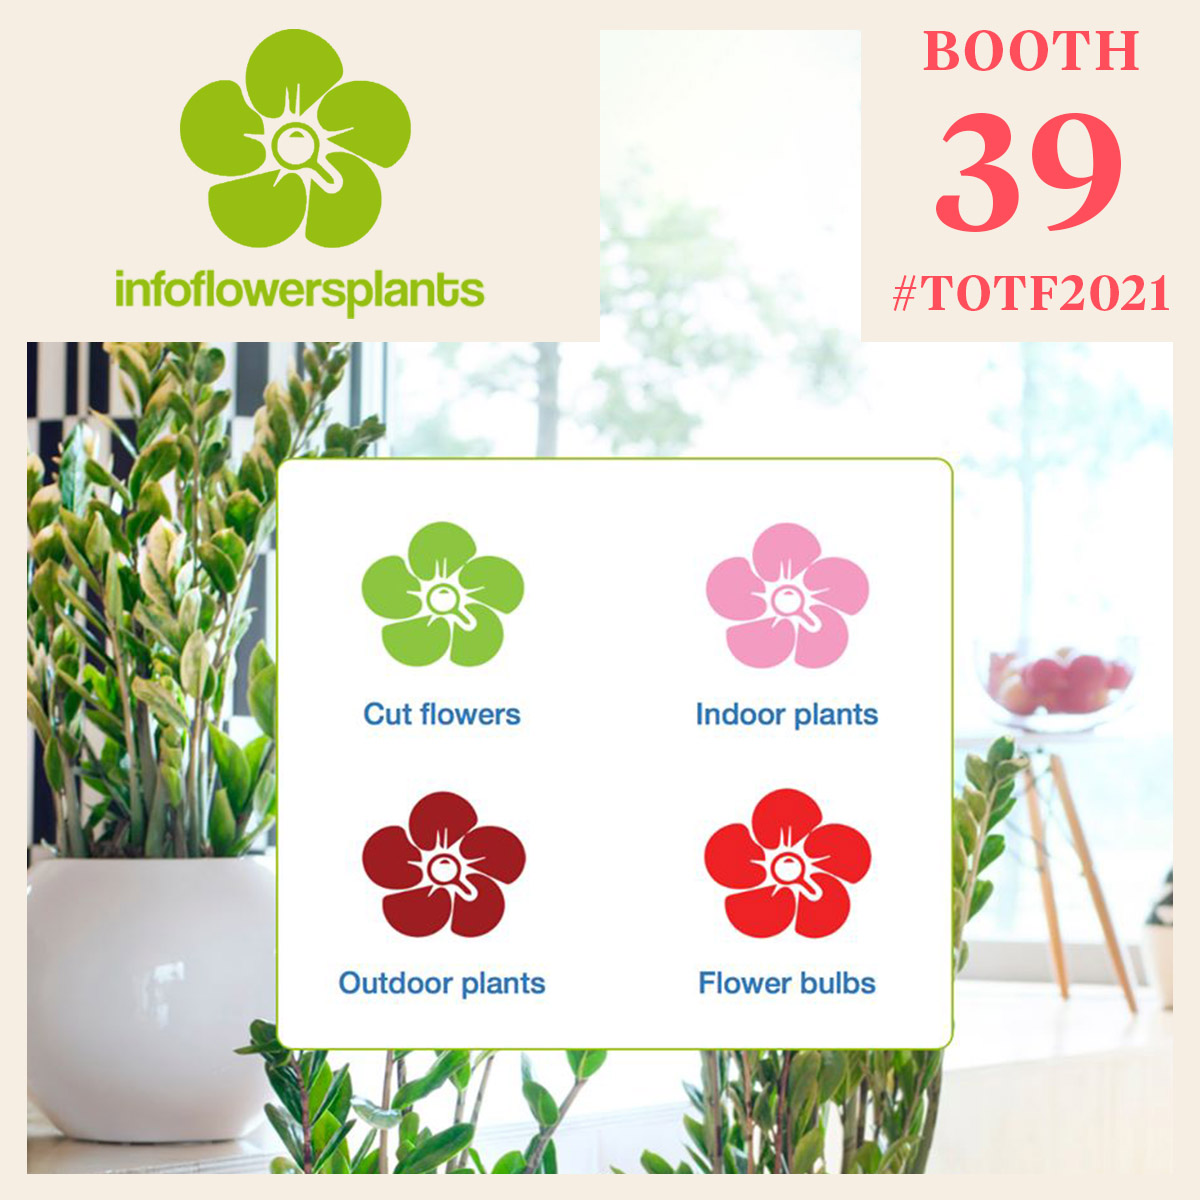 infoflowersplants-online-product-encyclopedia-featured